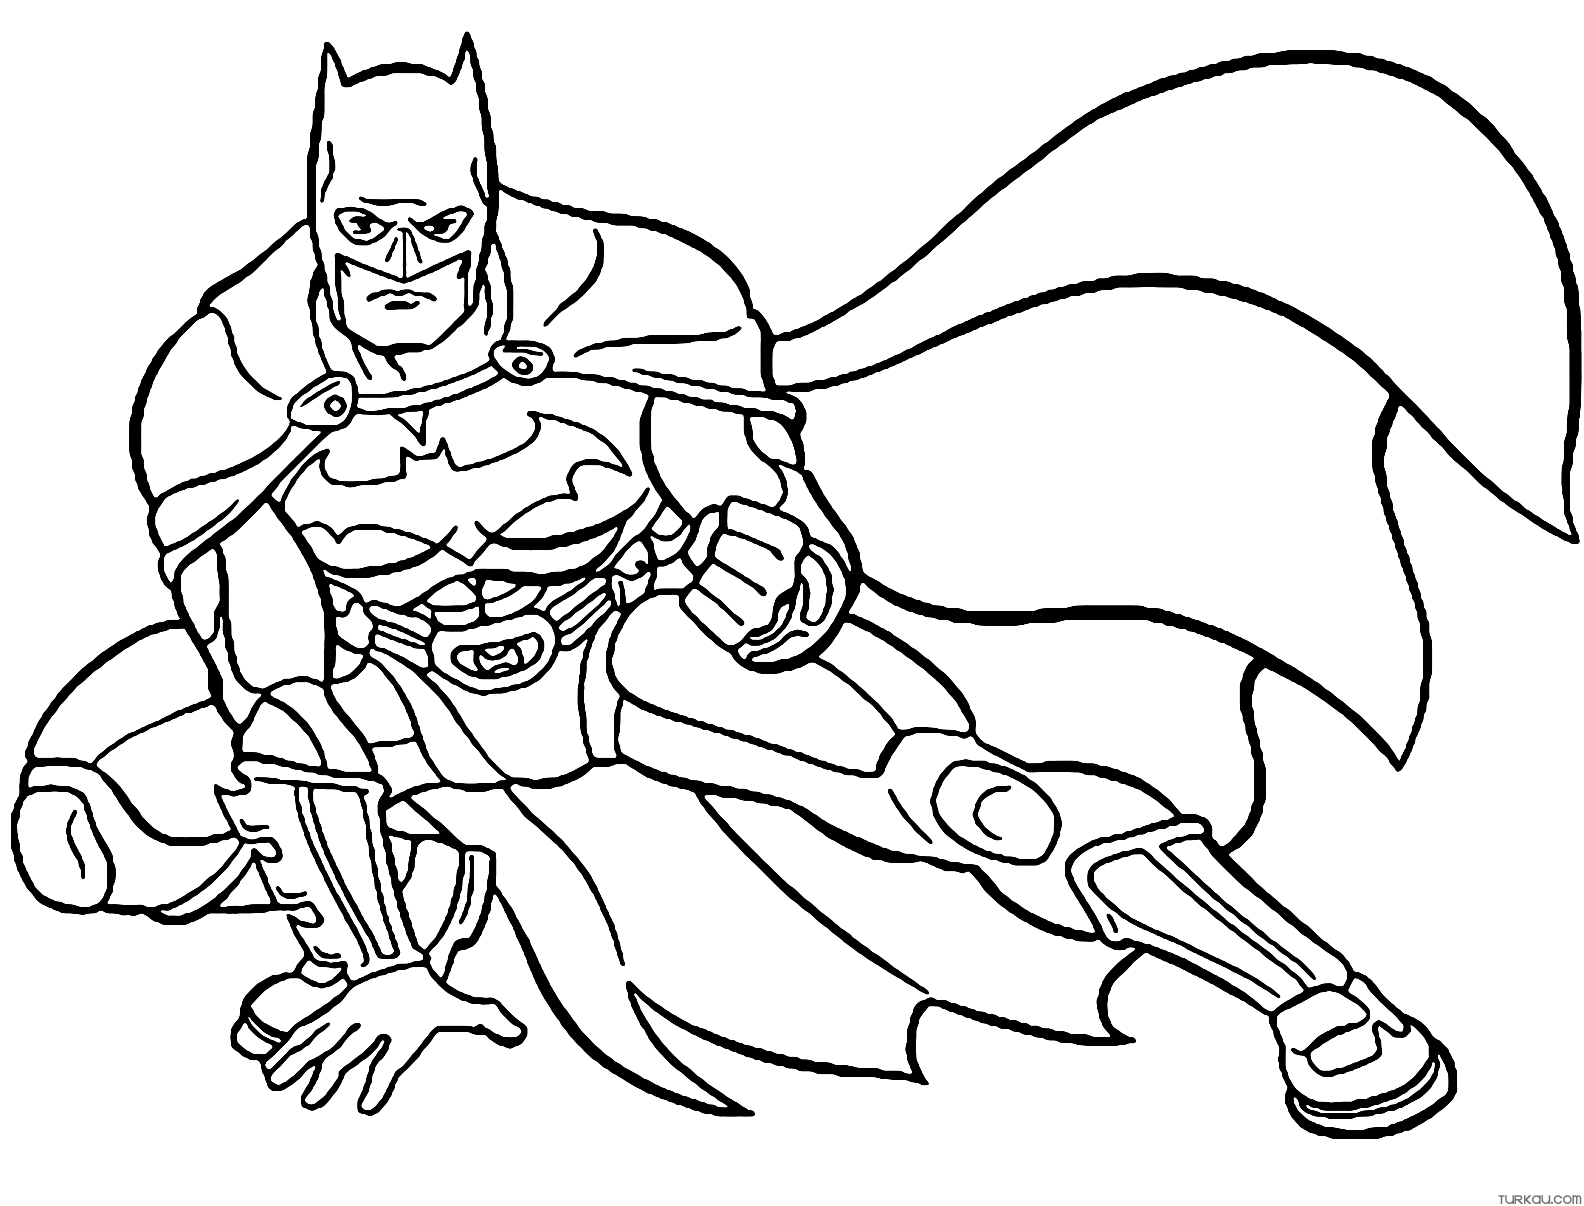 Batman Coloring Page » Turkau